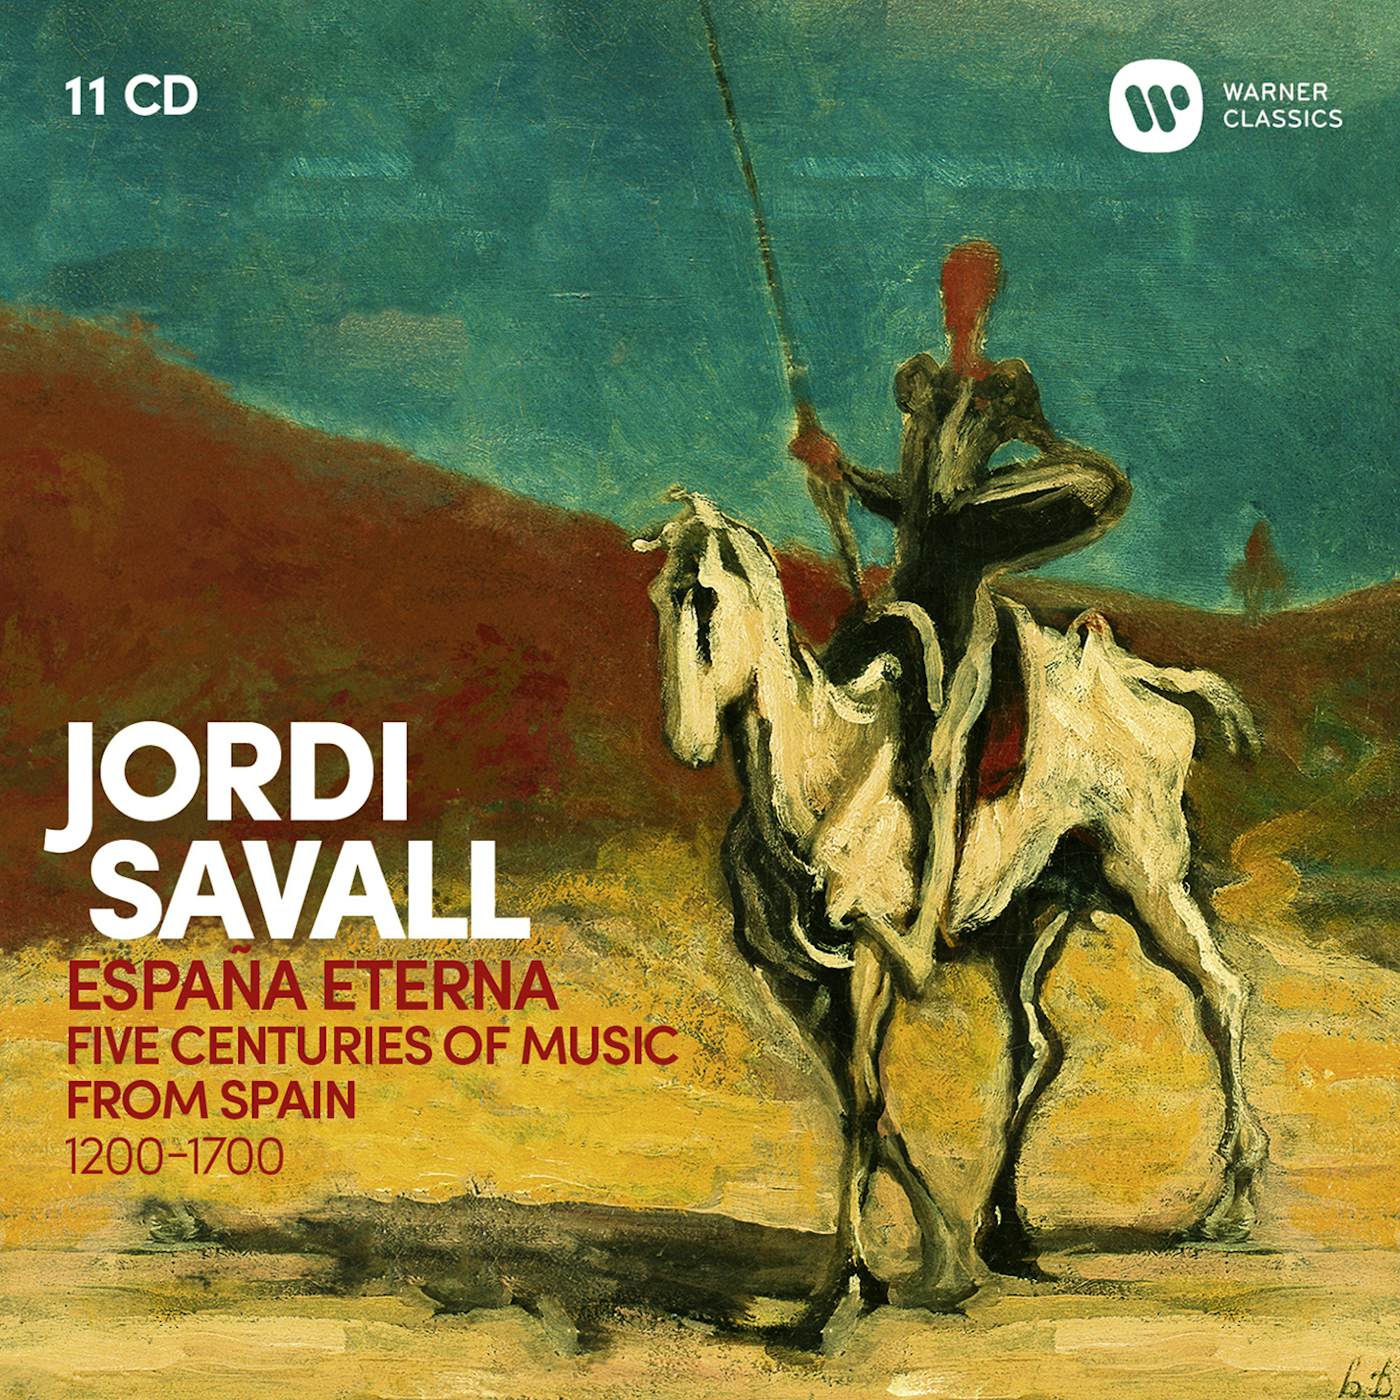 Jordi Savall ESPANA ETERNA CD